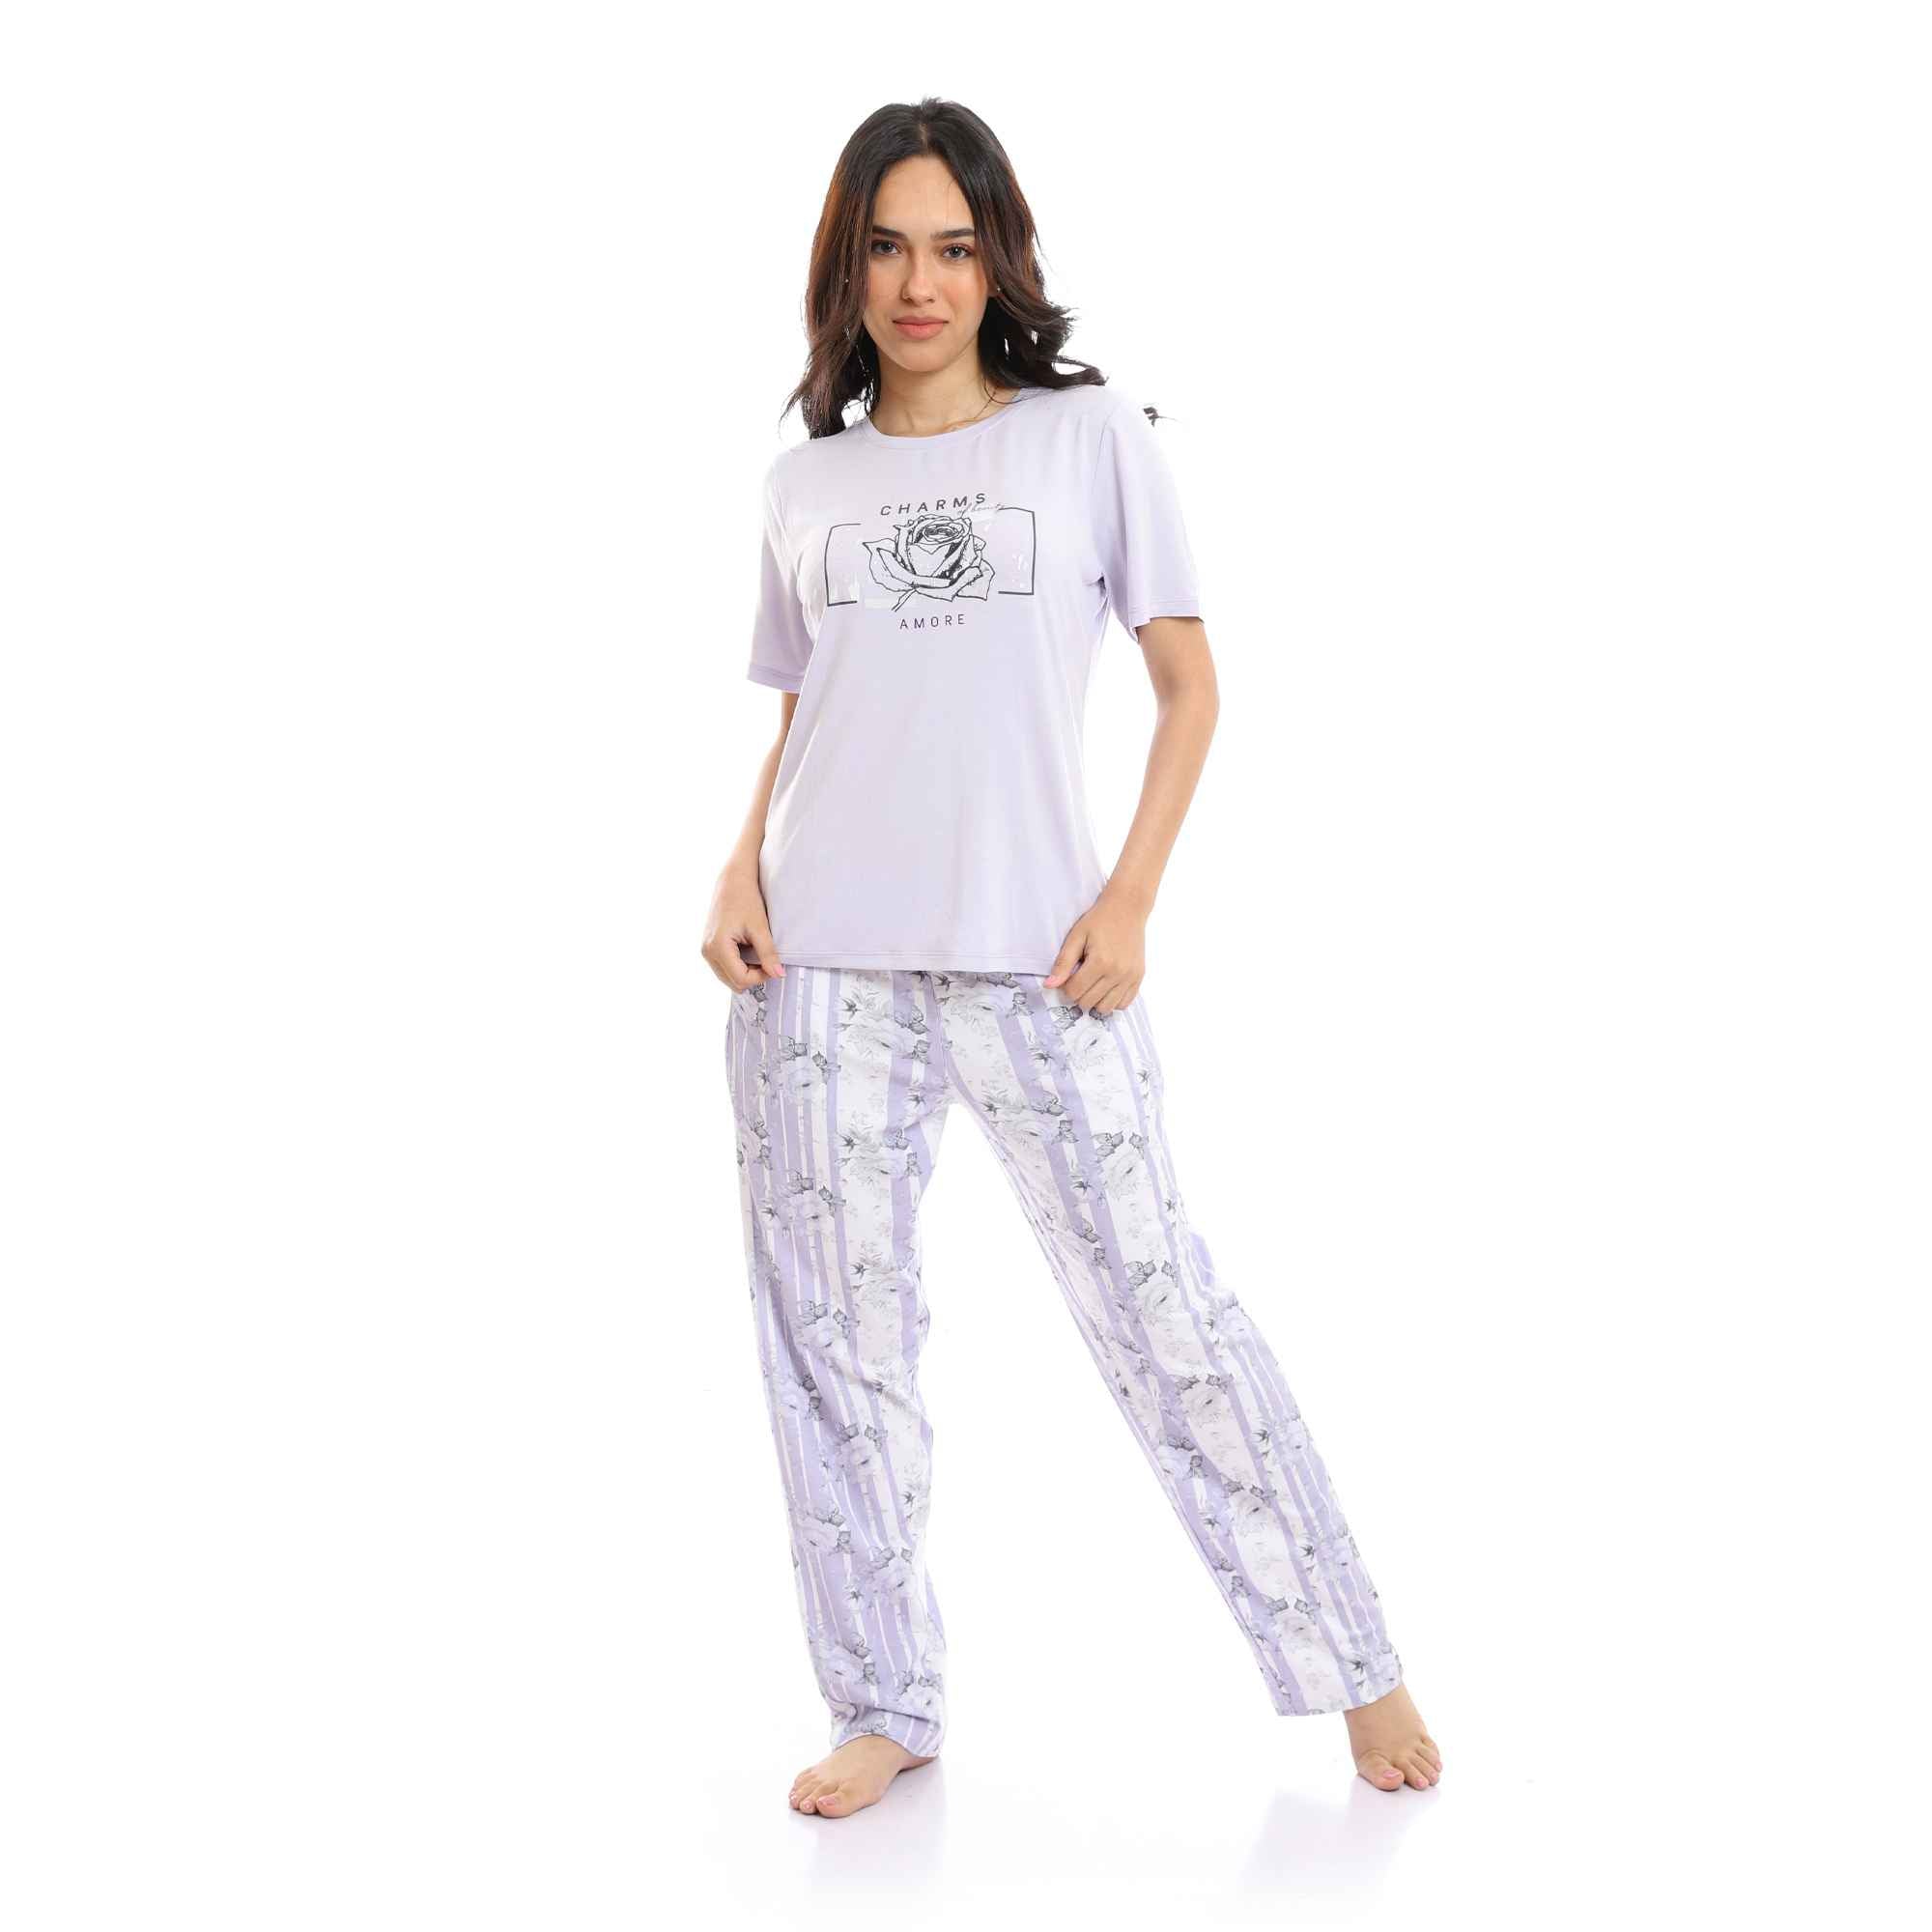 Round Neck Tee & Patterned Pants Pajama Set - Light Purple & White